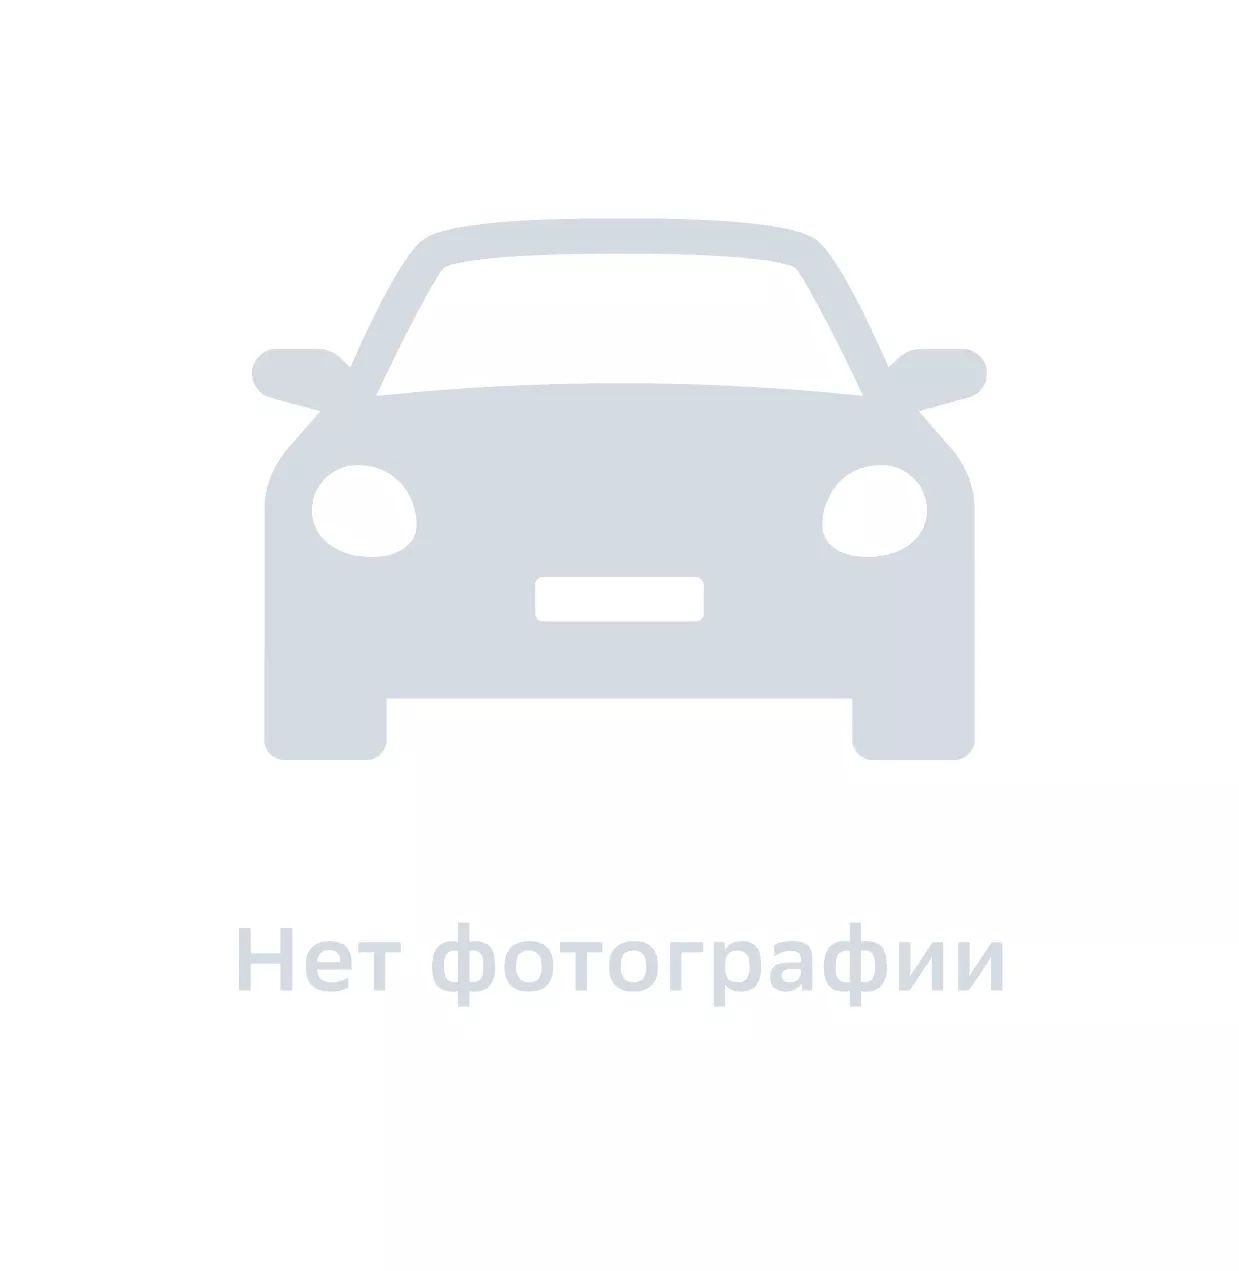 Вкладыши коренные, Hyundai-KIA, арт. 2102002621, цена за 1 шт.